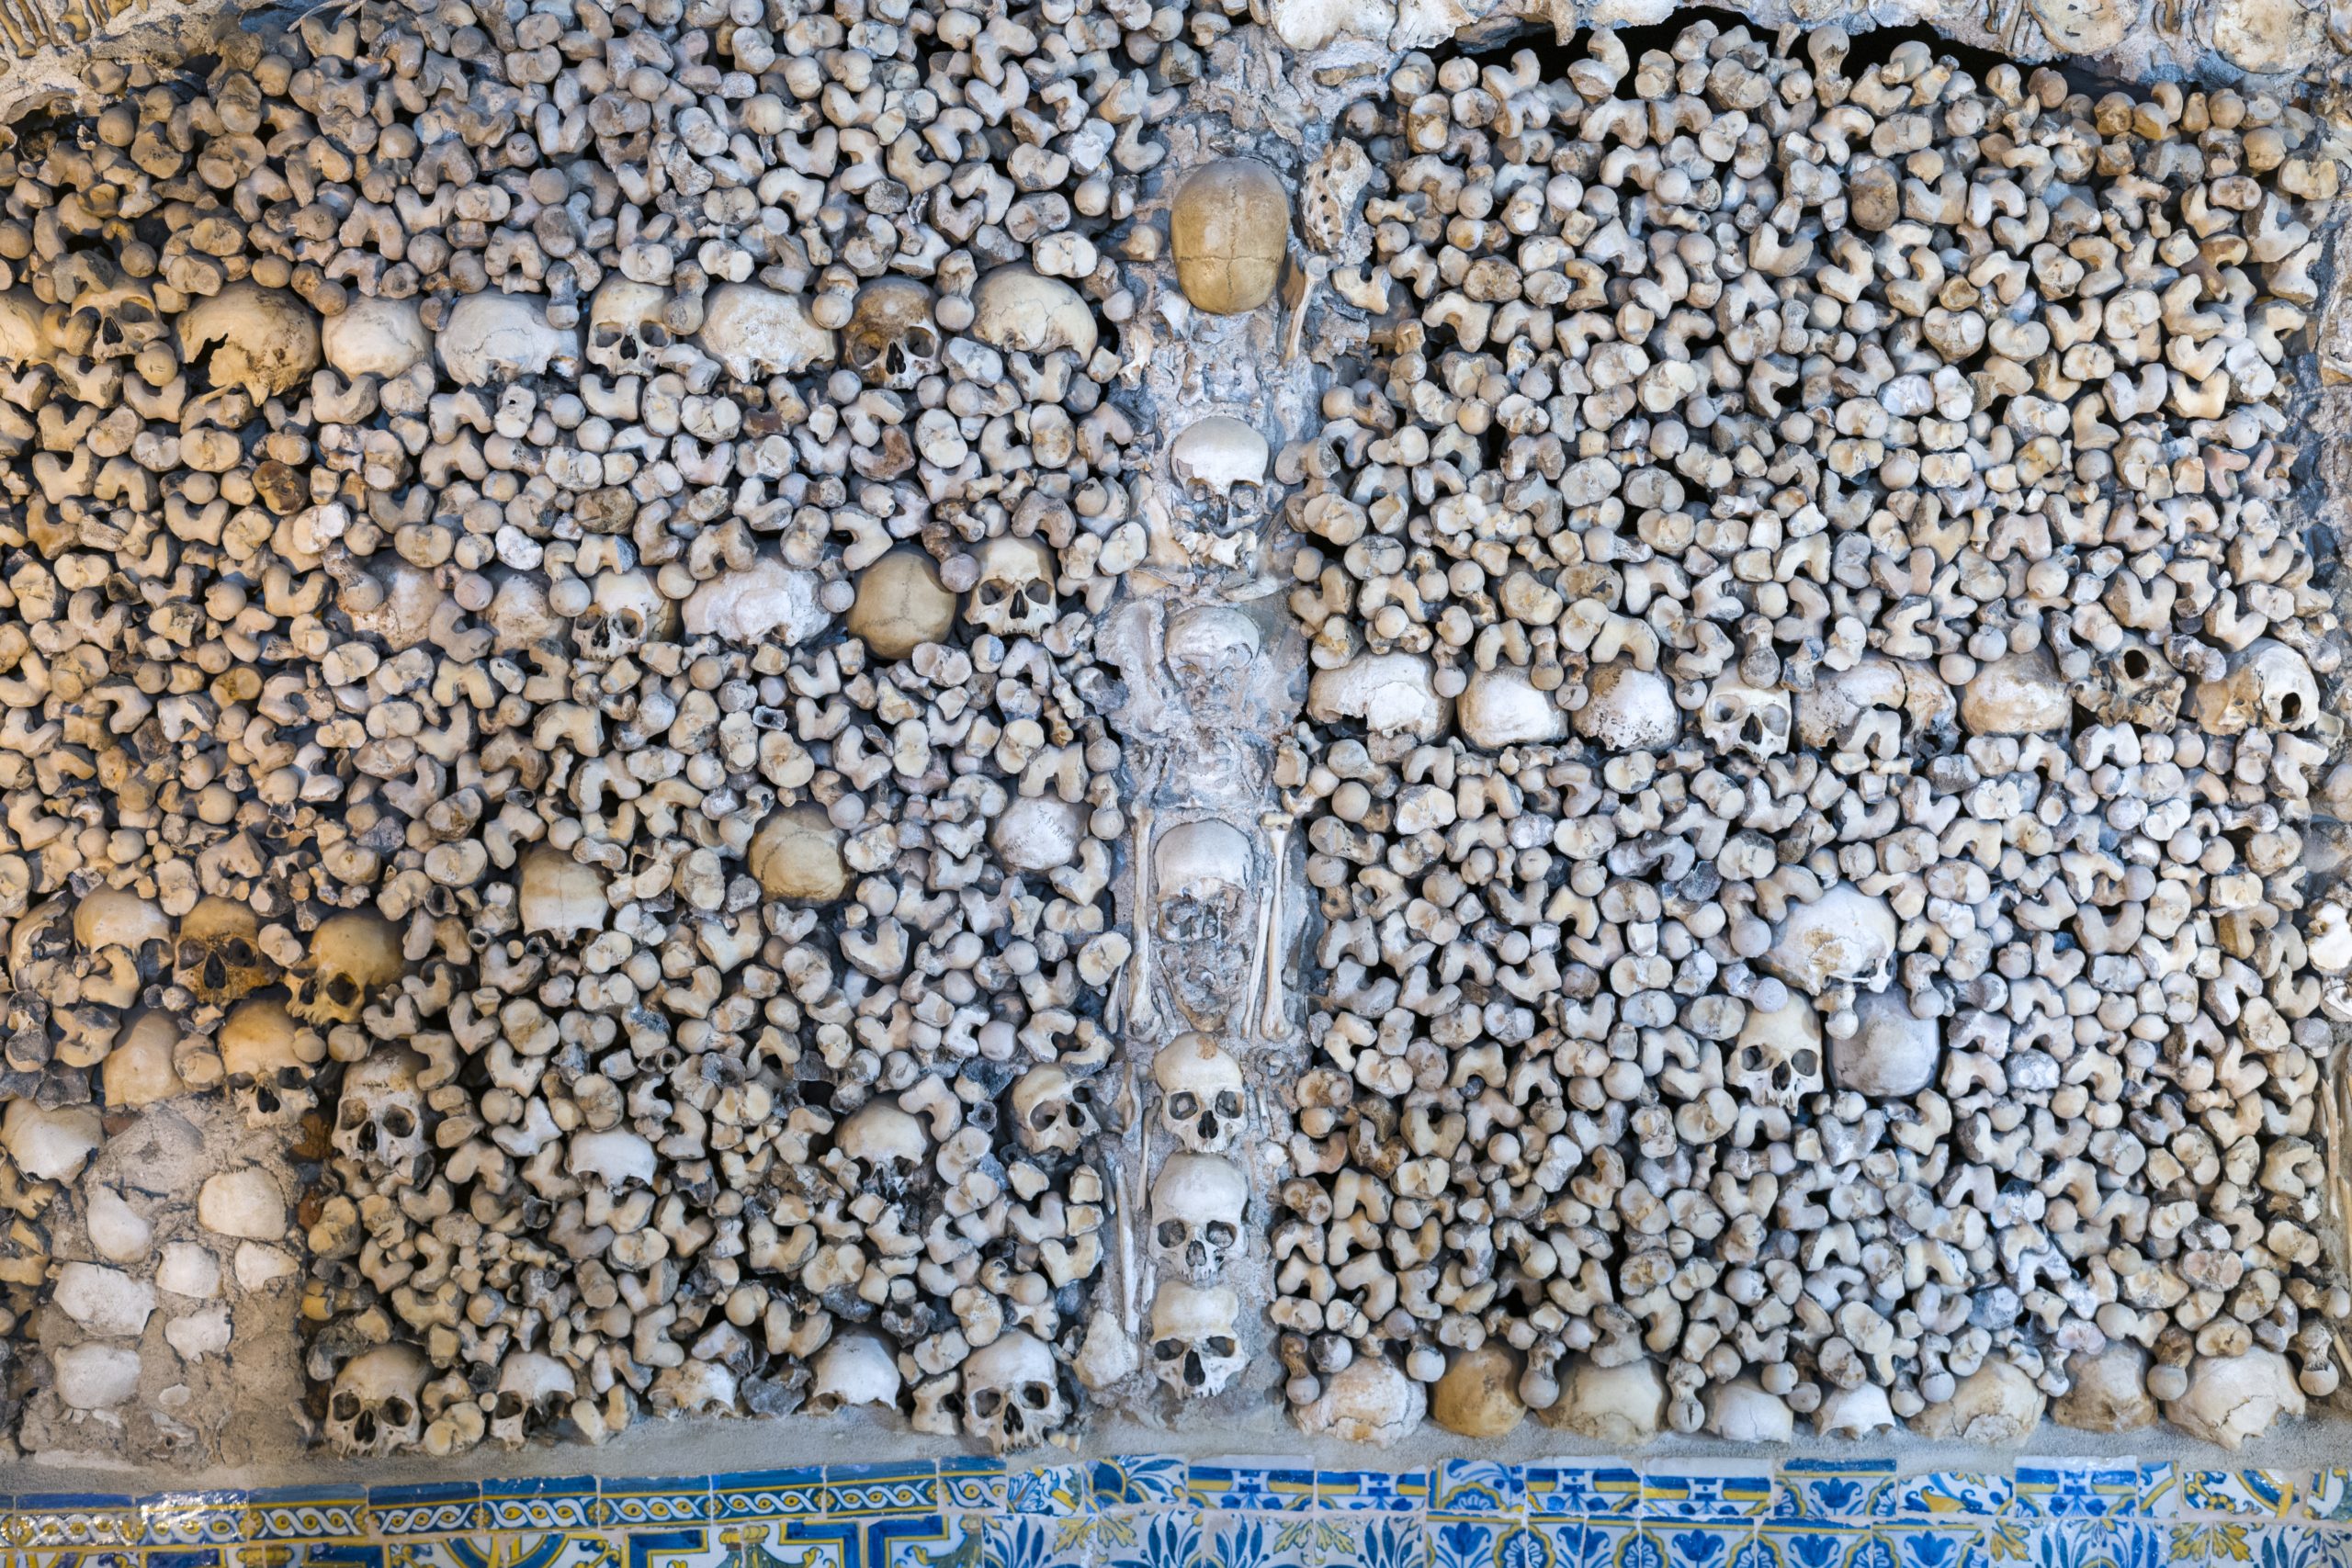 Getty Images/ كابيلا دي أوسوس، عبارة عن كنيسة داخلية صغيرة مزيّنة بالكامل بالعظام البشرية، وضمن ذلك الجماجم وعظام الساق والفخذ، تمّ بناؤها على الطراز القوطي بين القرنين الخامس عشر والسادس عشر.